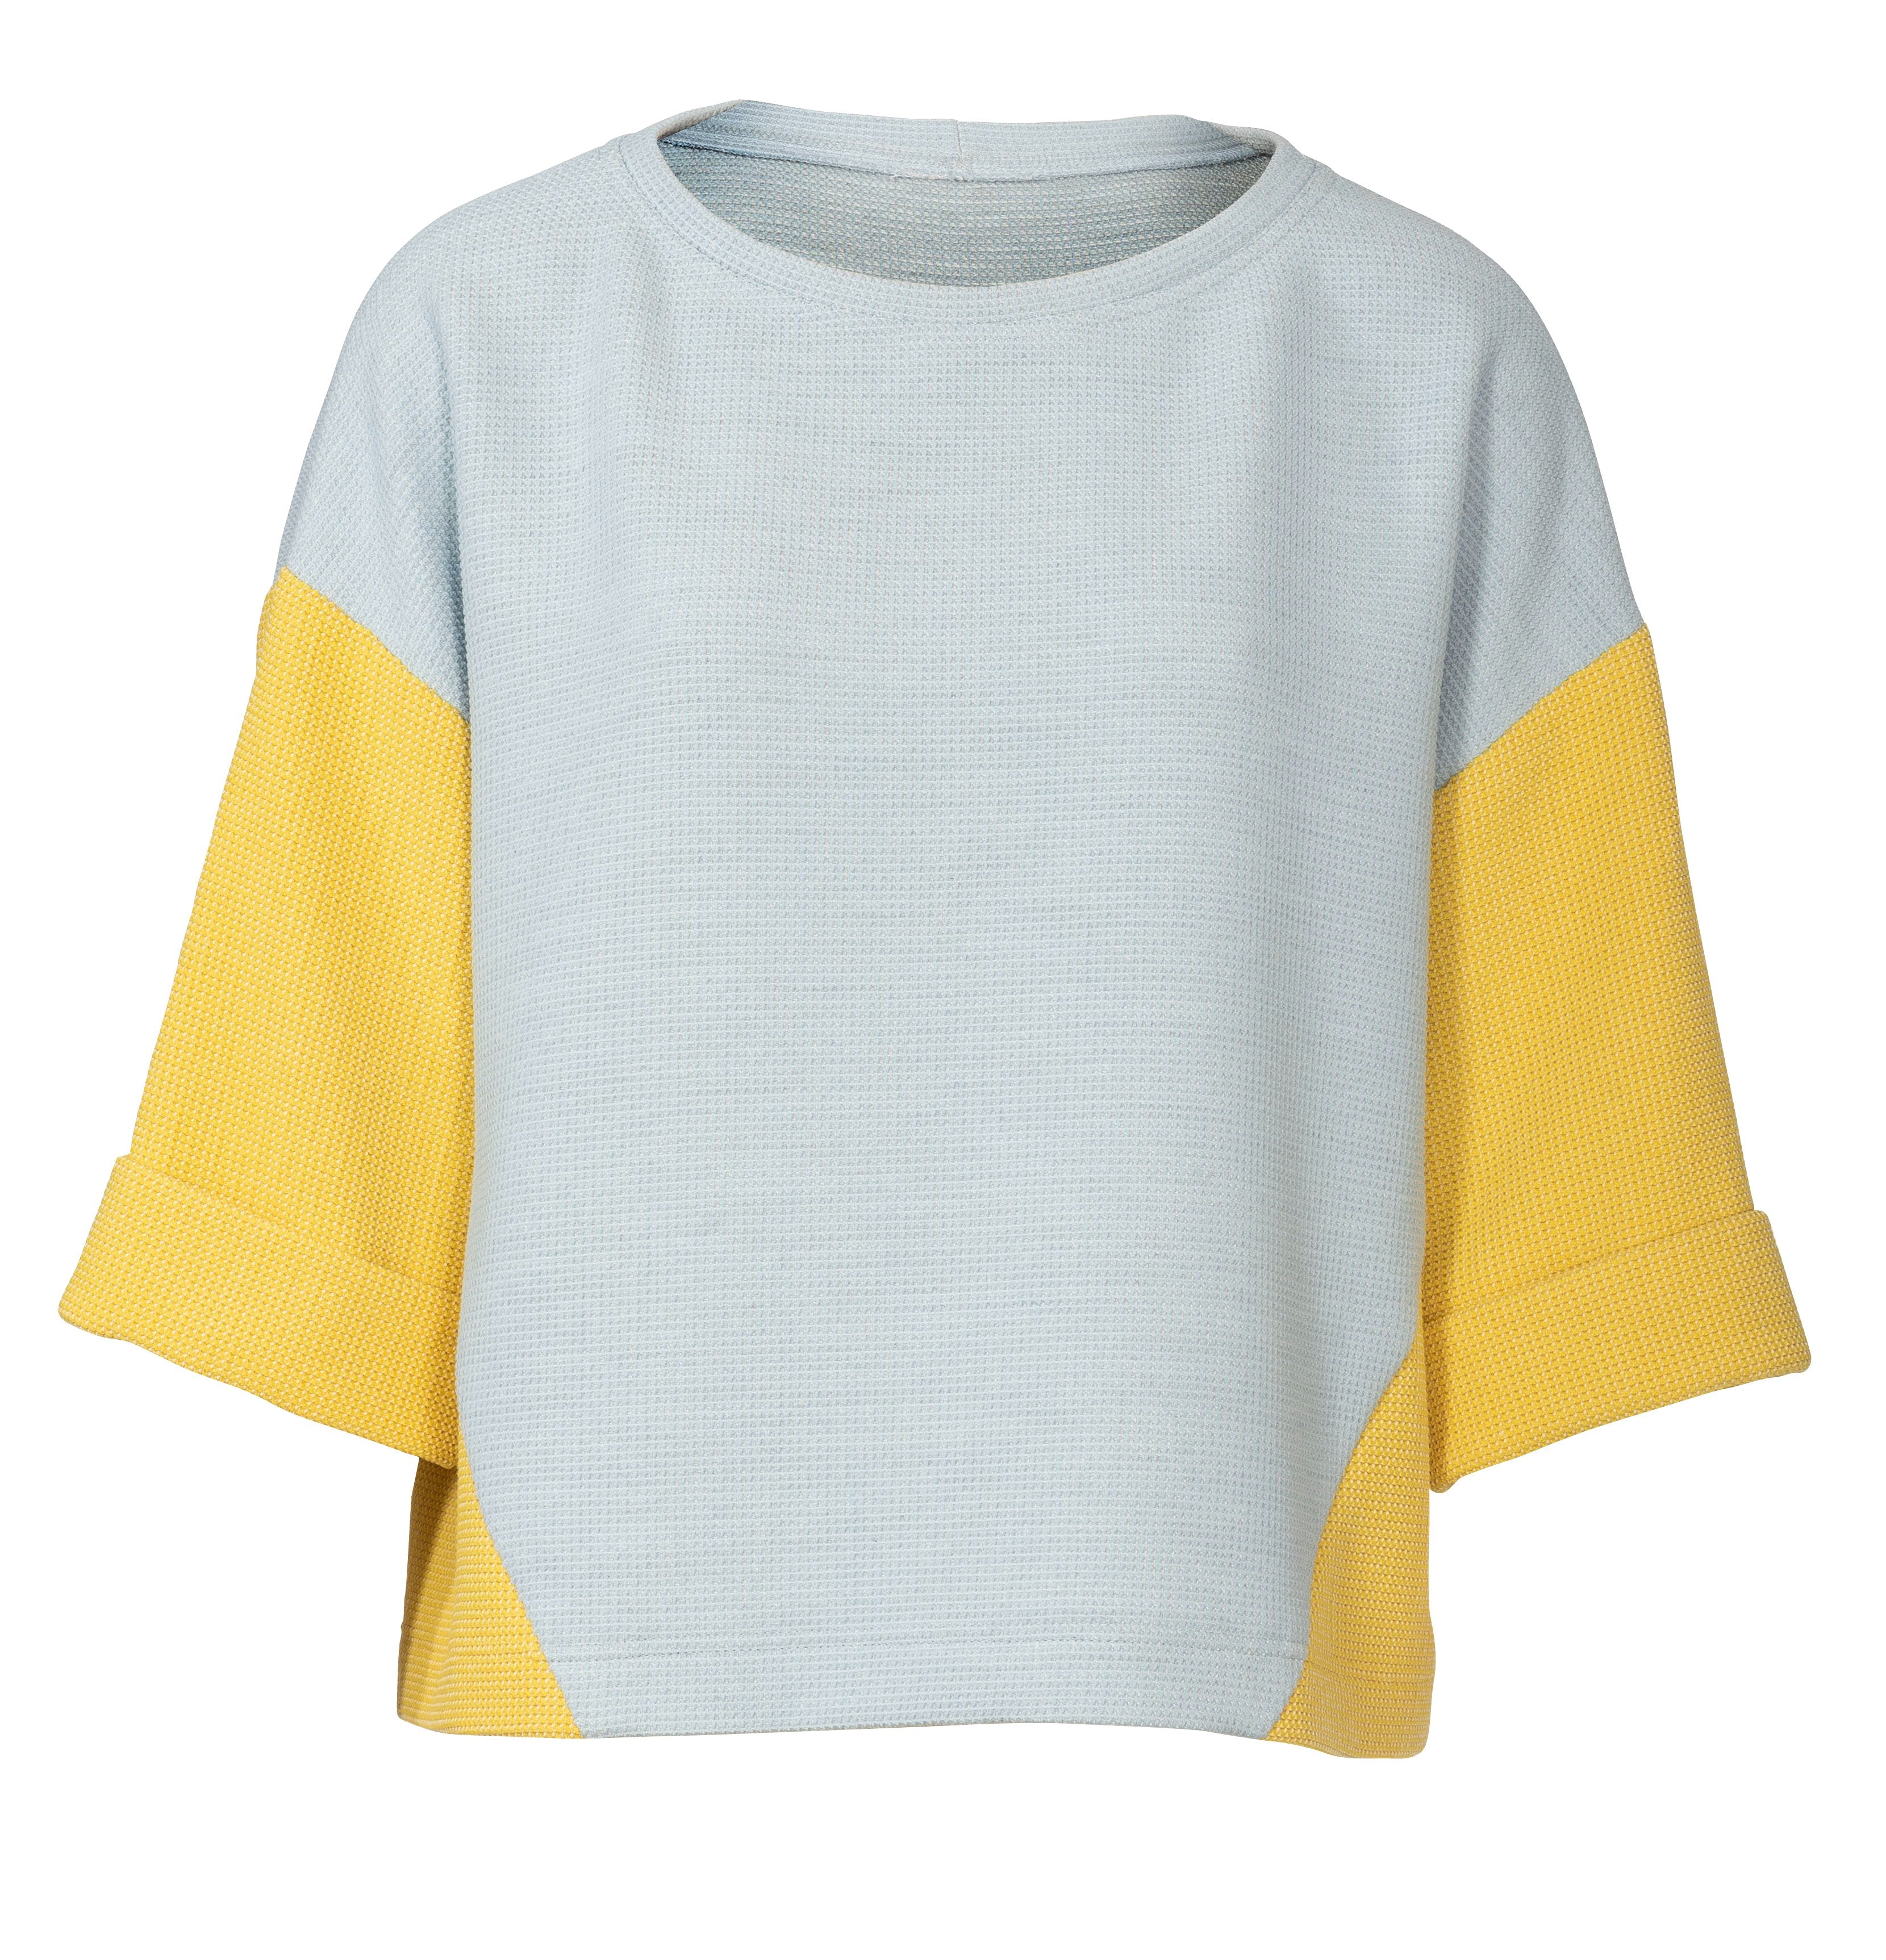 Burda Pattern 6203  Sweatshirt – T-Line – with Interesting Seam Lines from Jaycotts Sewing Supplies